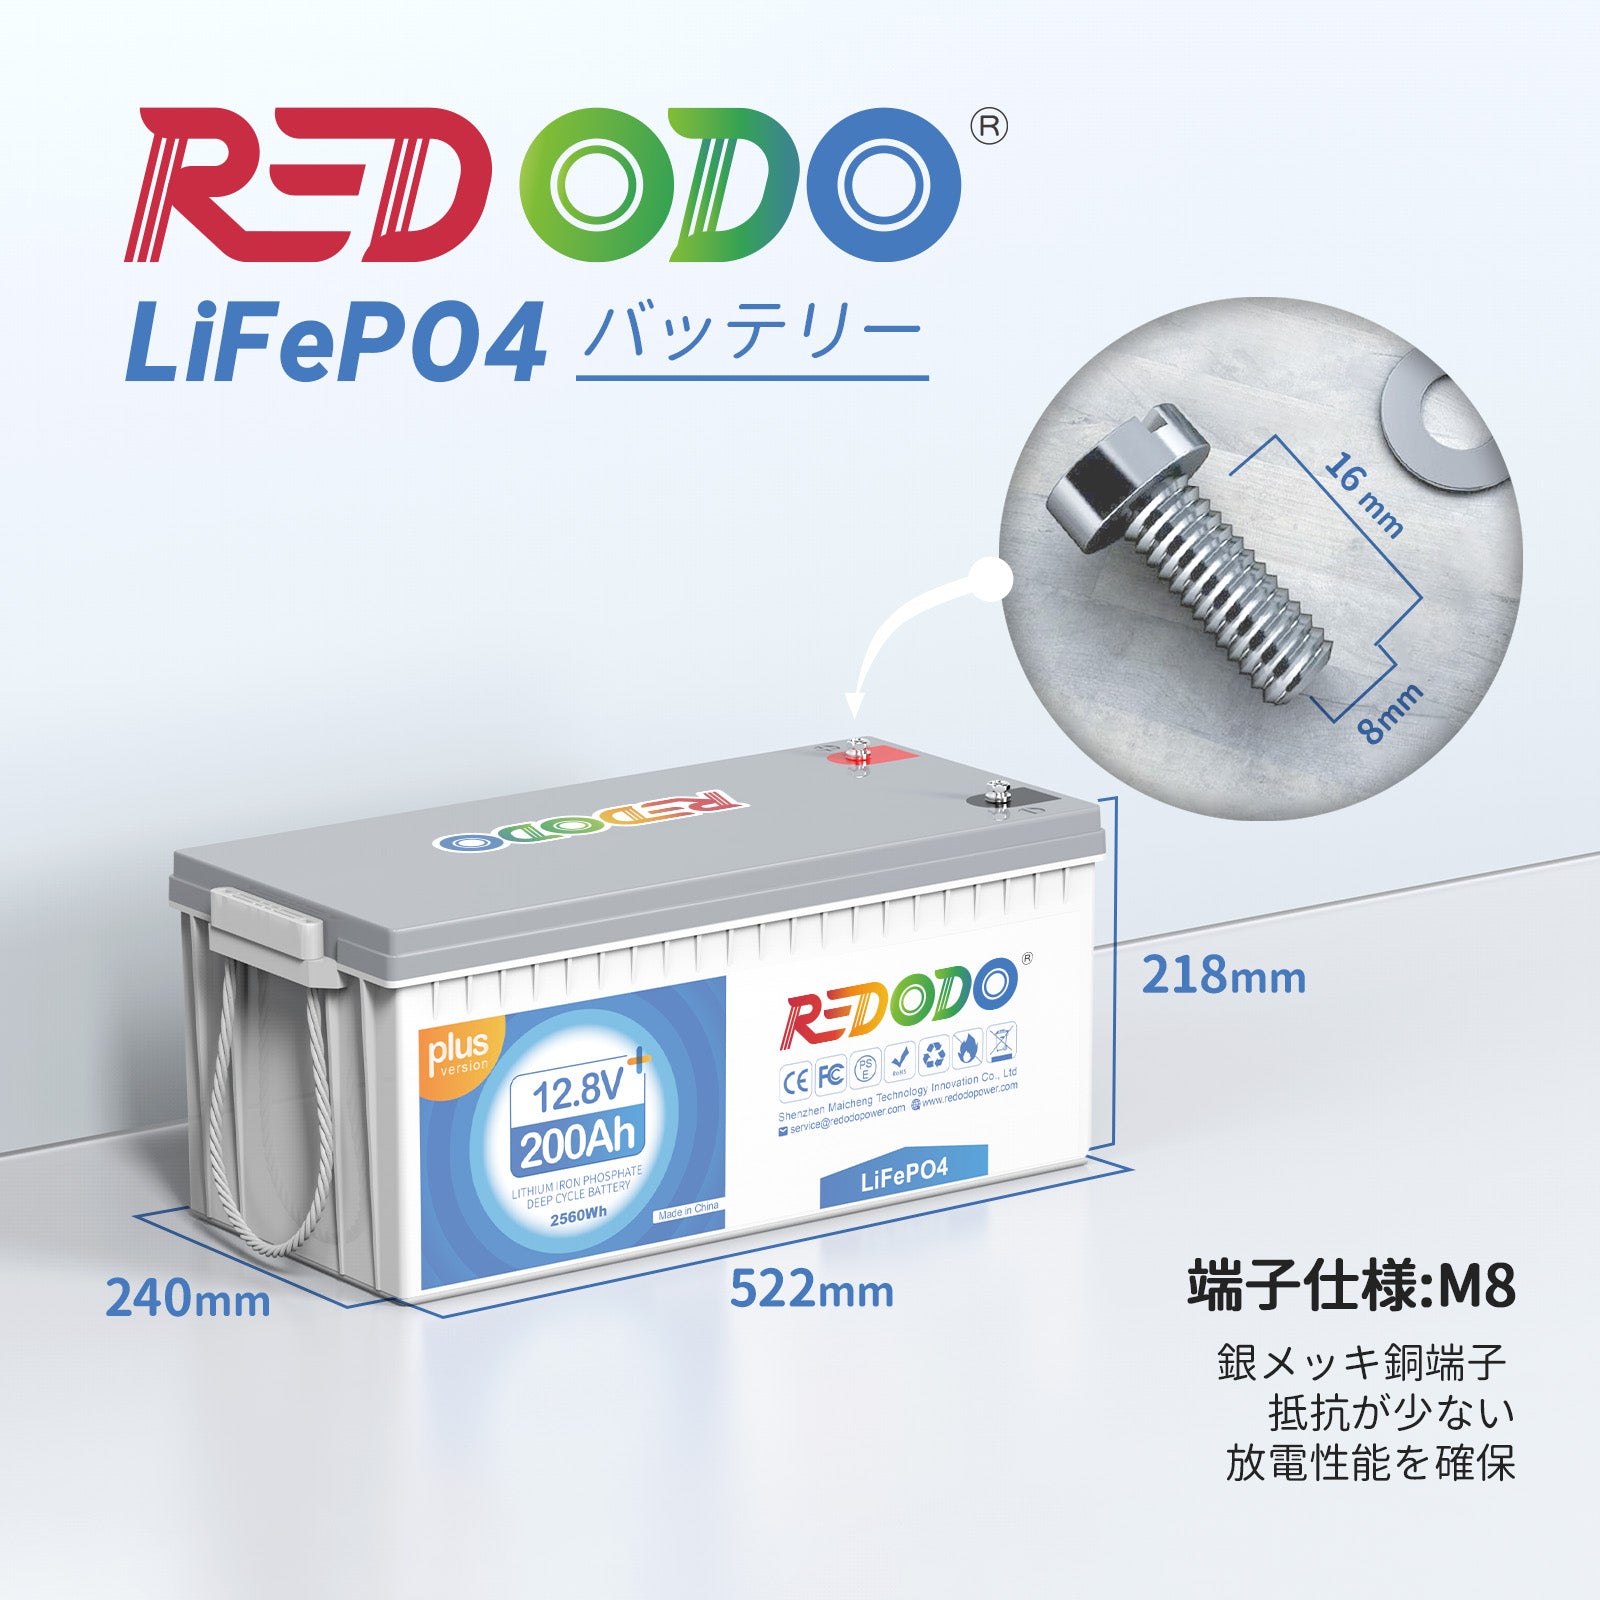 Redodo 12V 200AhPlus Lithium Iron Phosphate Battery